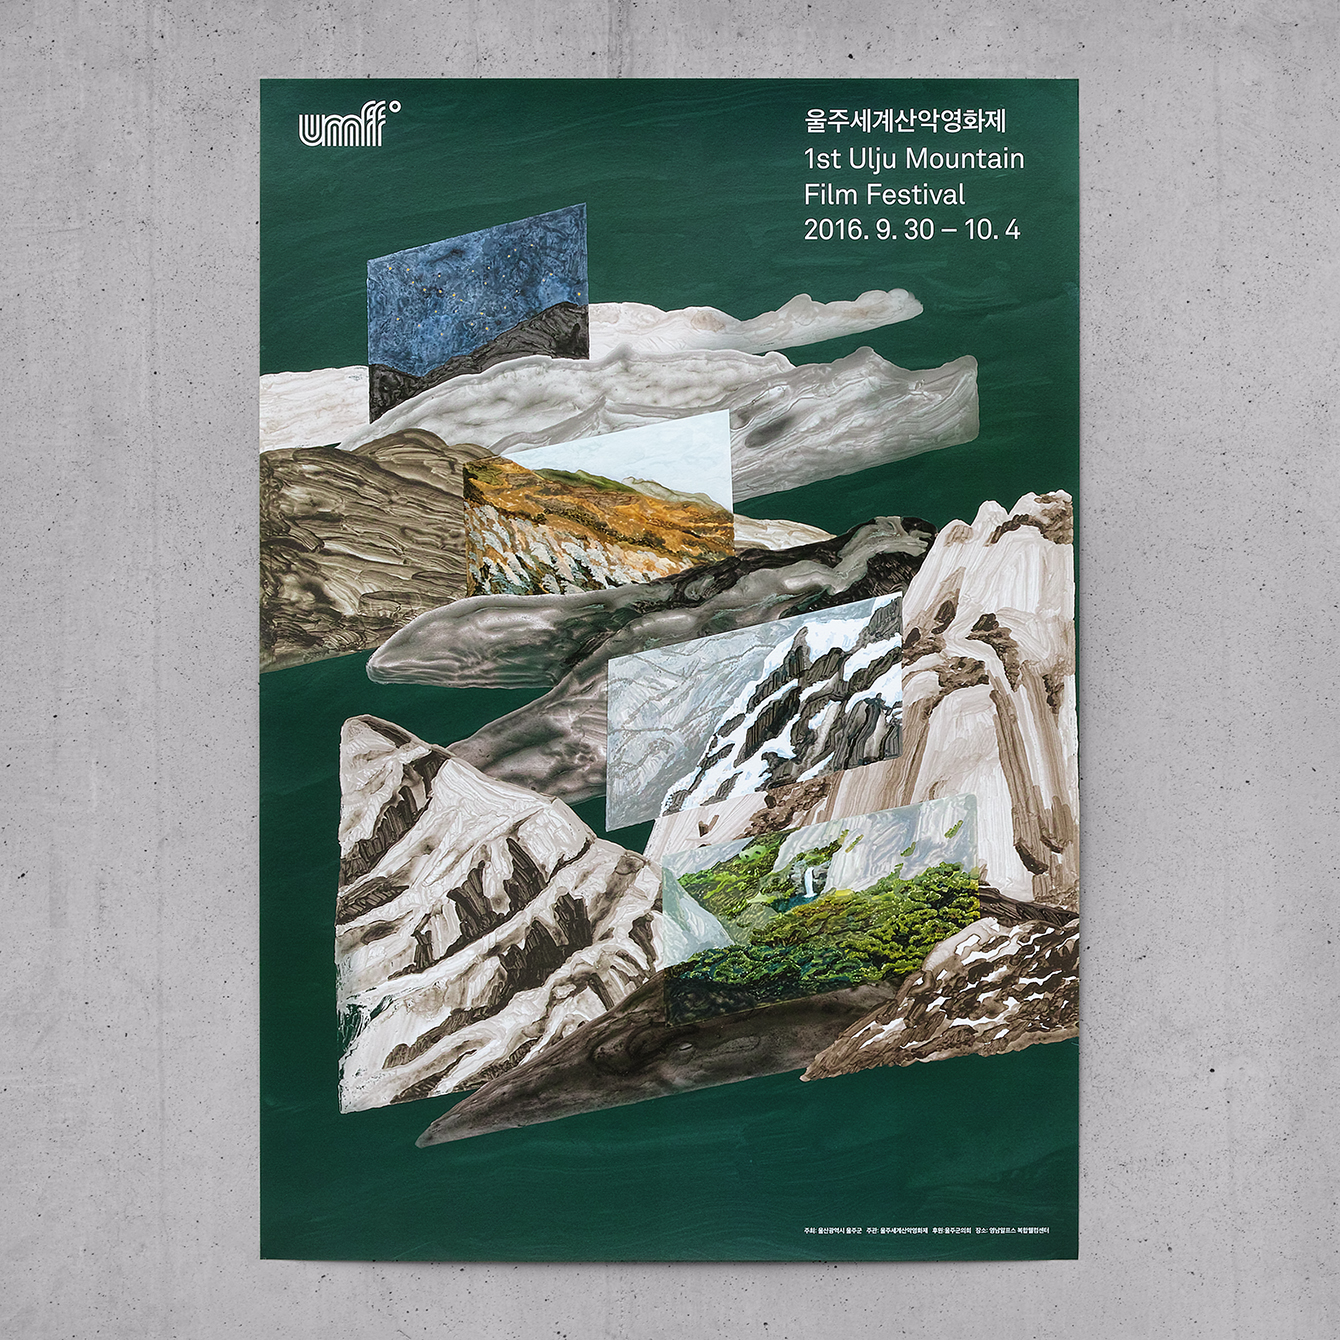 Ulju Mountain Film Festival posters designed by Studio fnt